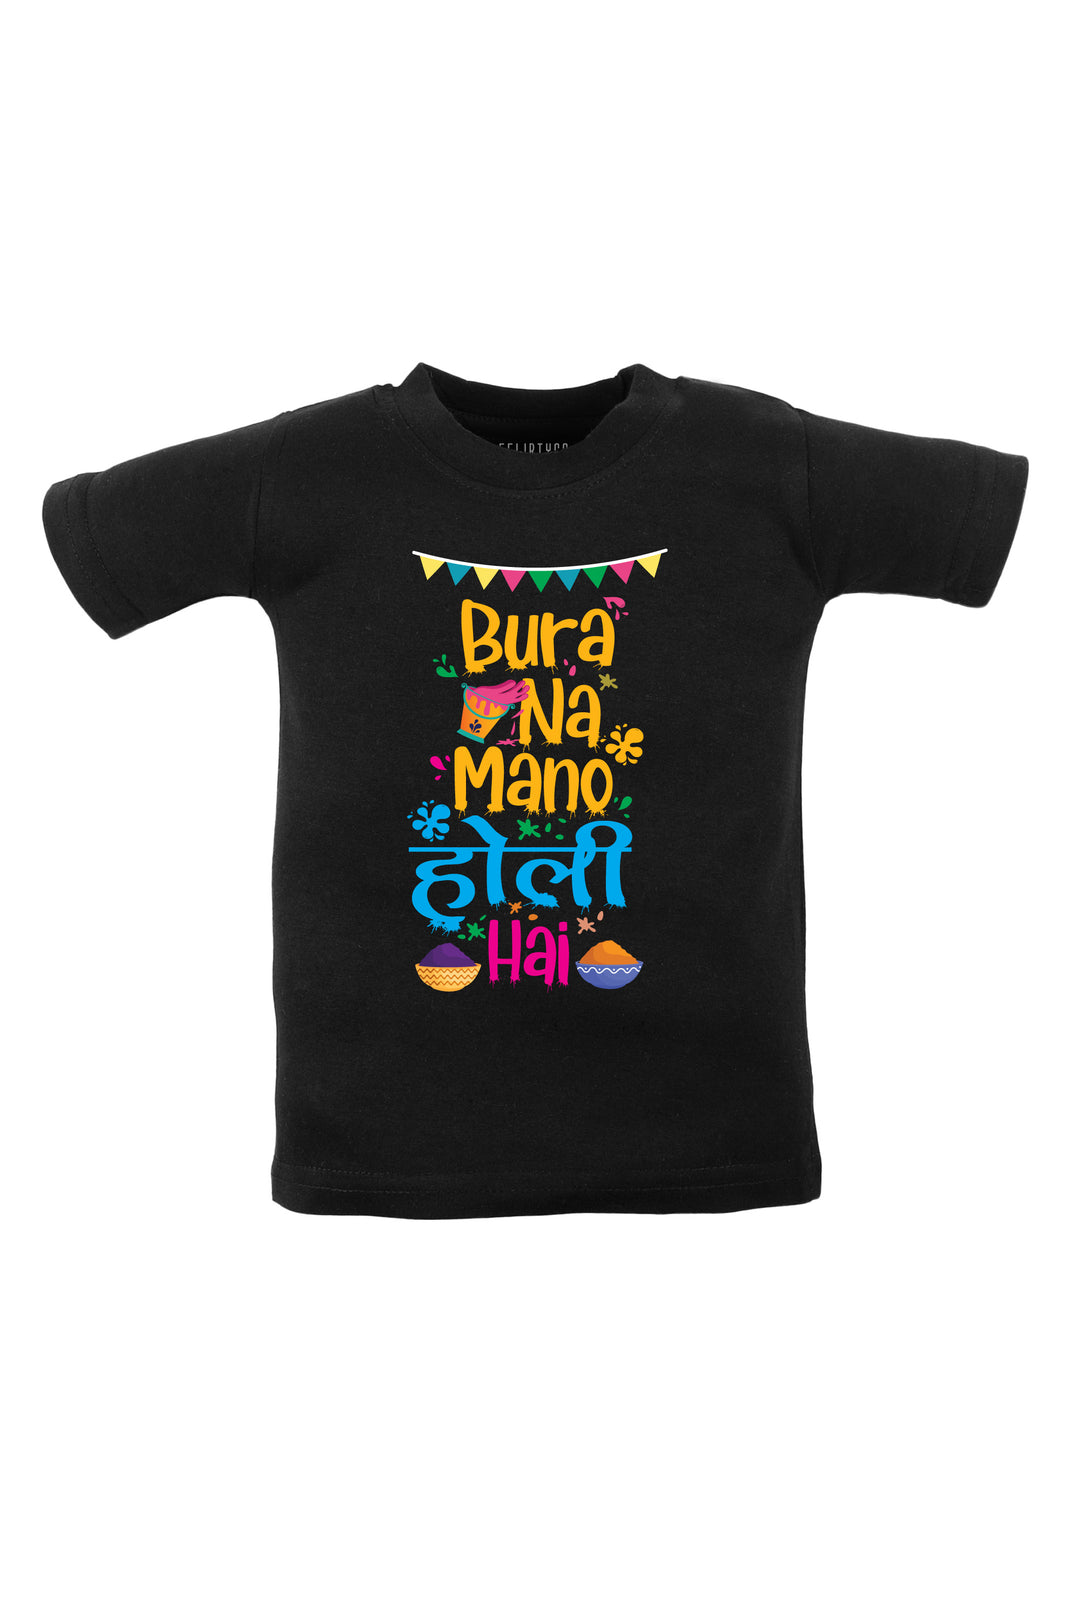 Bura Na Maano Holi Hai Kids T Shirt